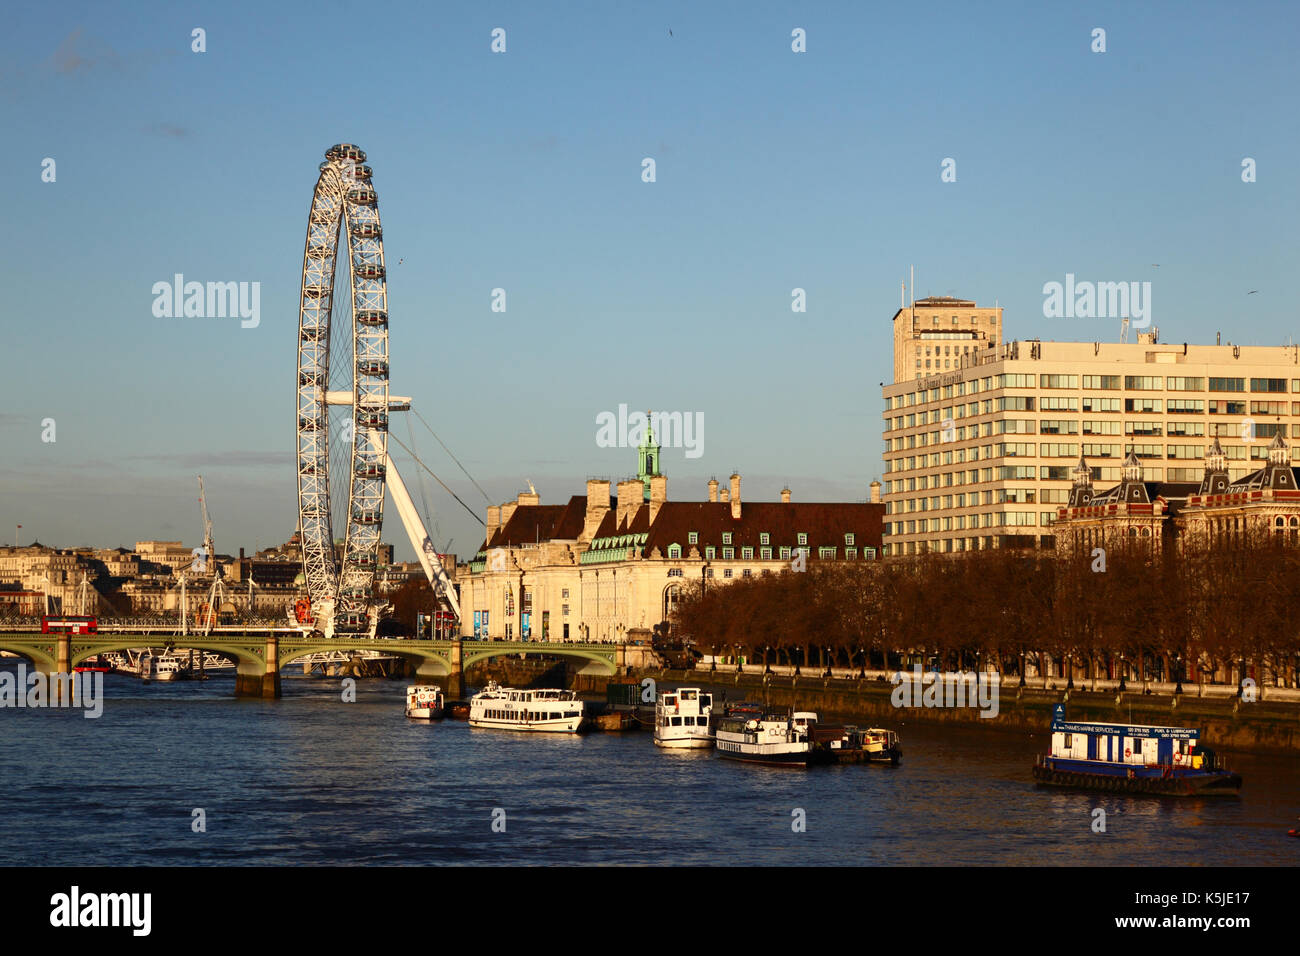 London Eye / Millennium Wheel, County Hall and St Thomas' Hospital, South Bank, London, England Stock Photo